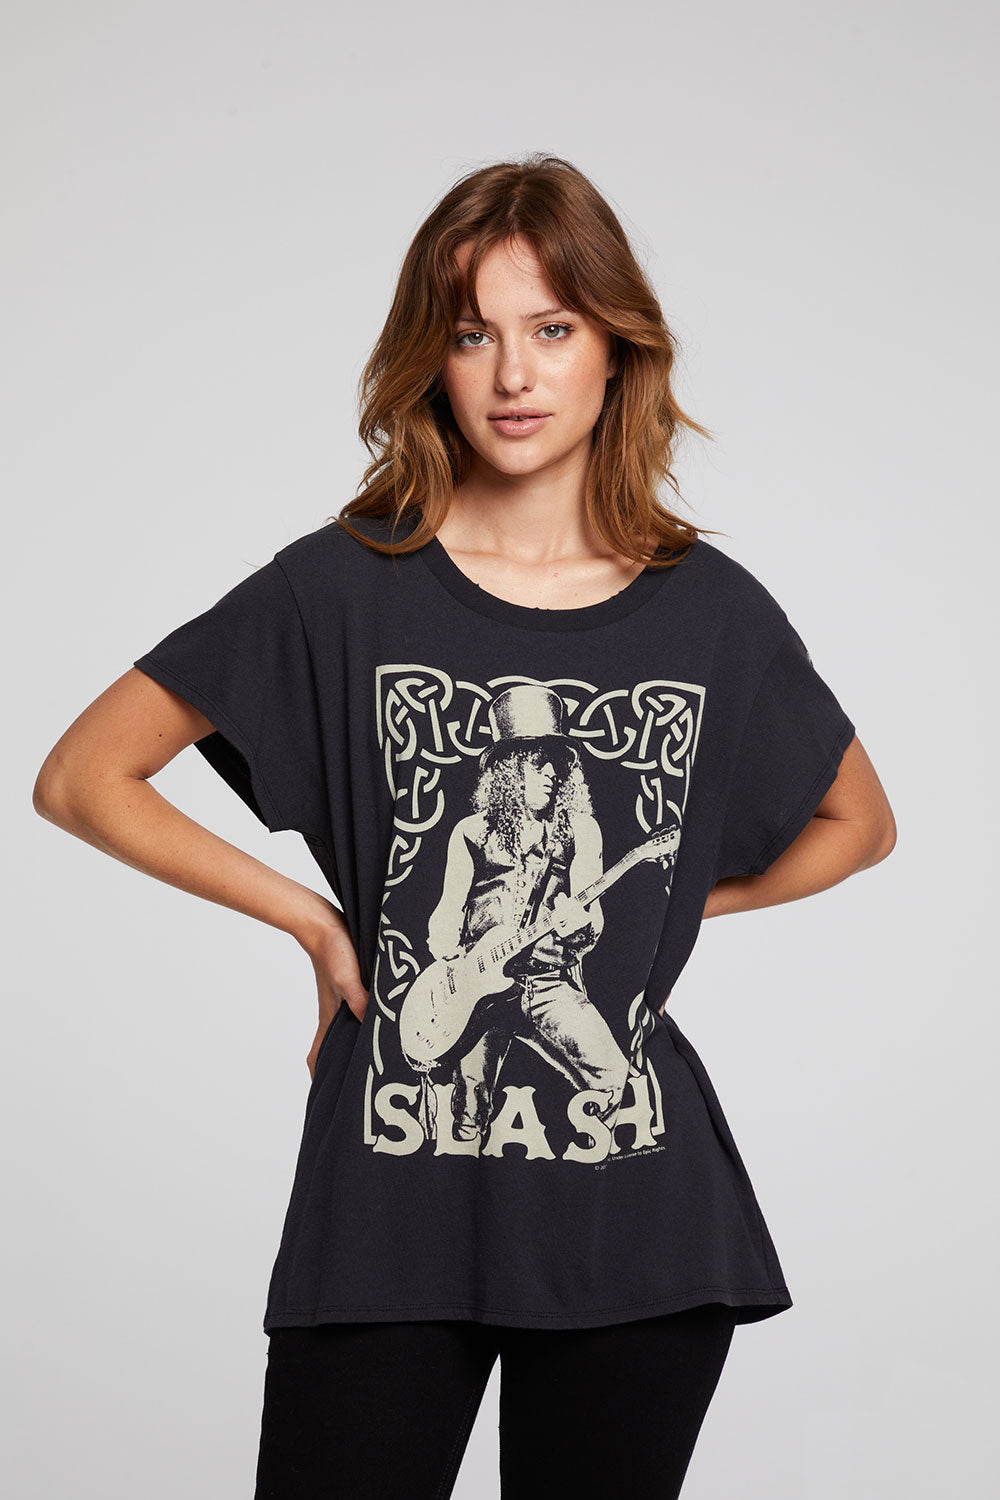 Slash Guitar Tee WOMENS chaserbrand